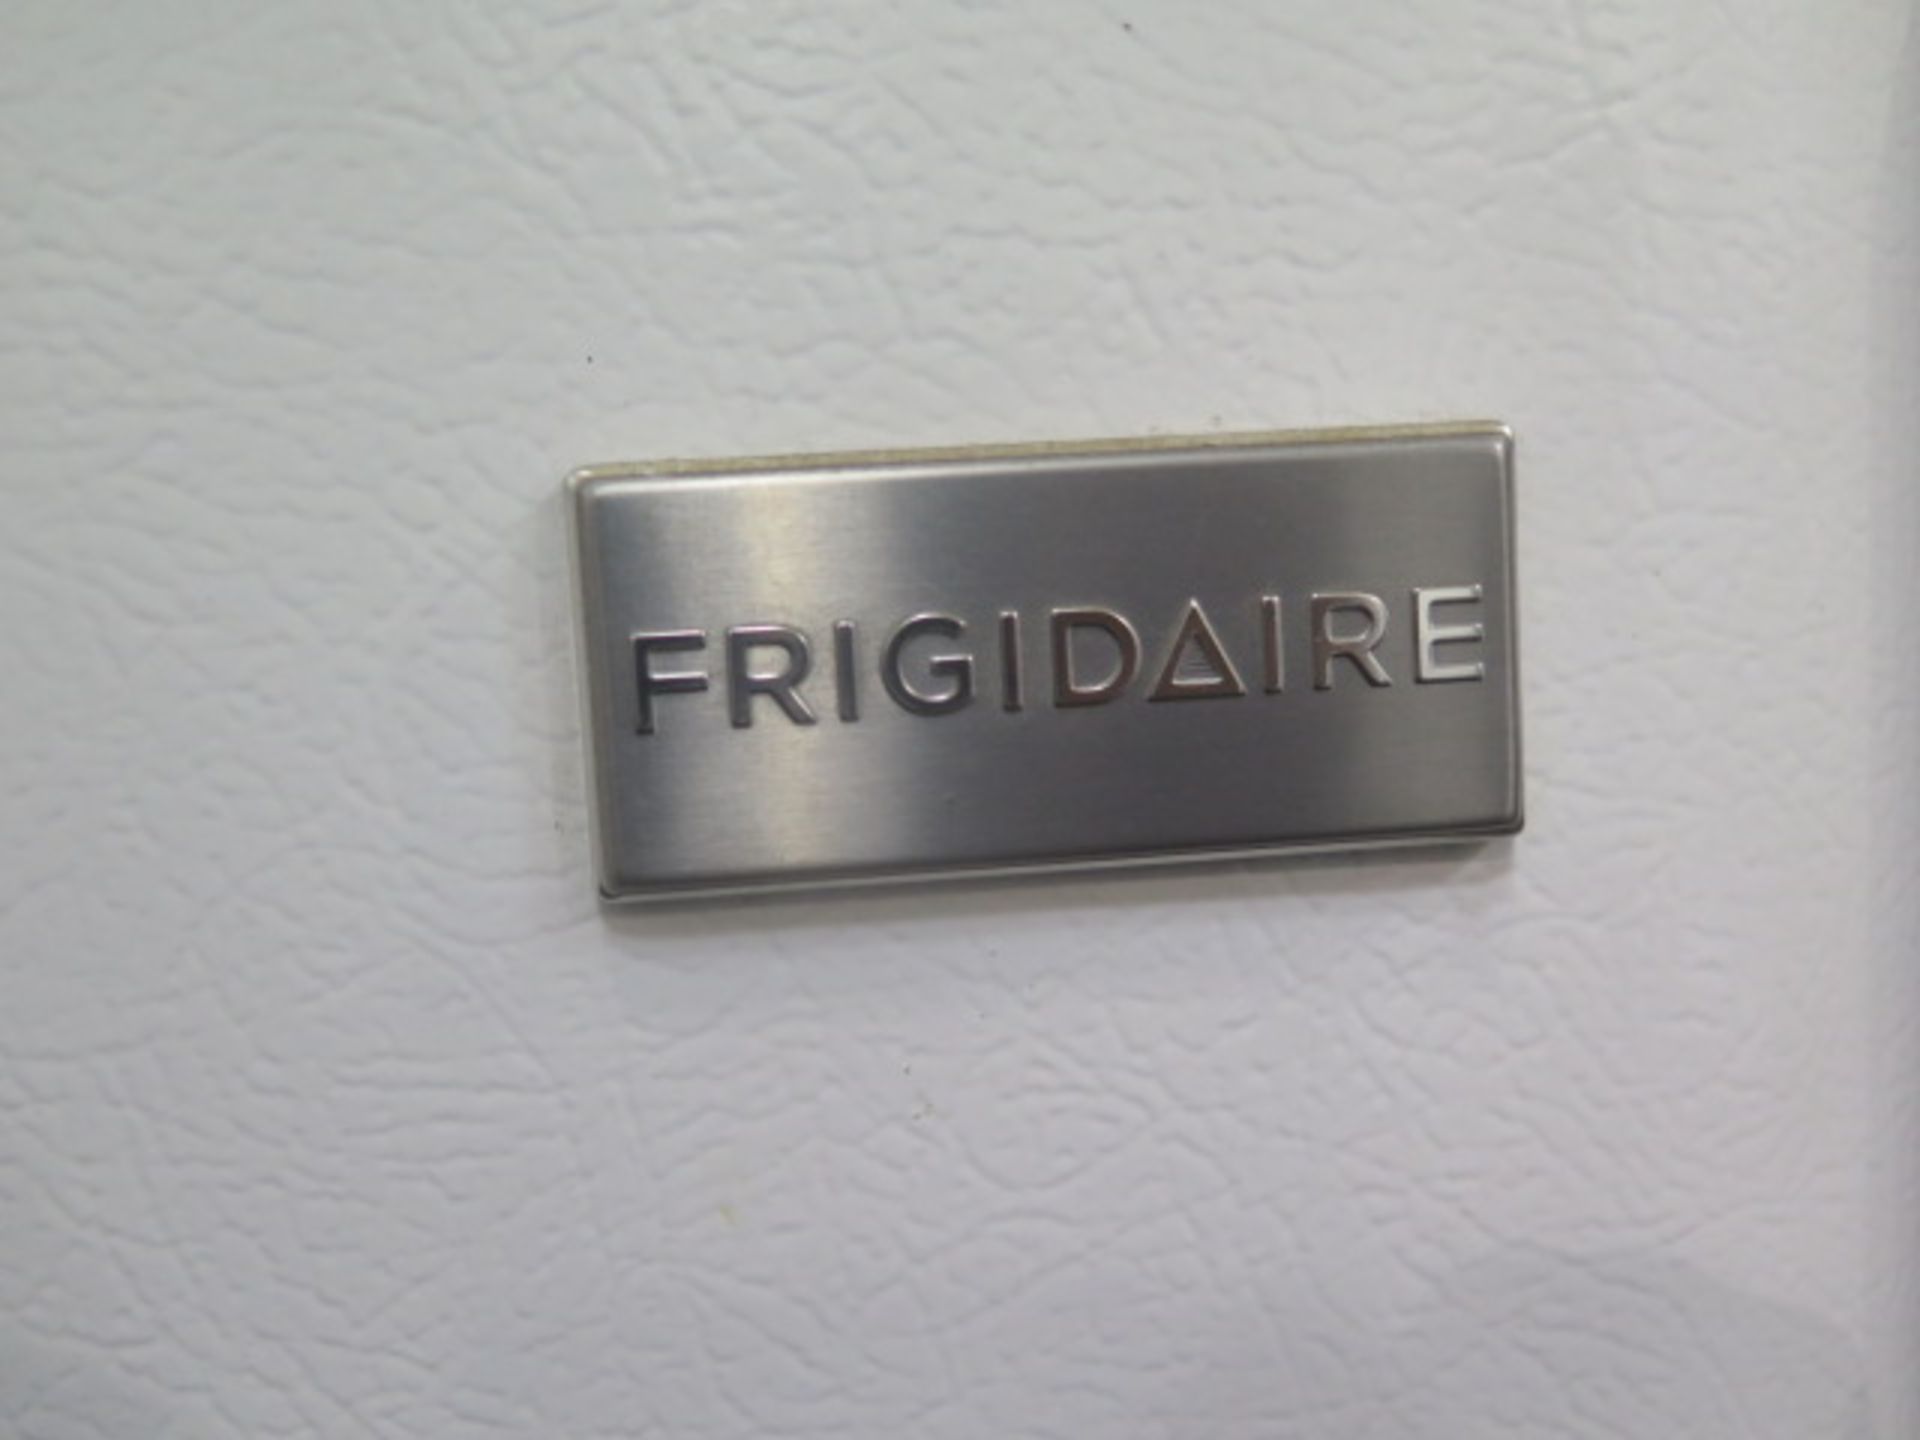 Frigidaire Refrigerator (SOLD AS-IS - NO WARRANTY) - Image 4 of 4